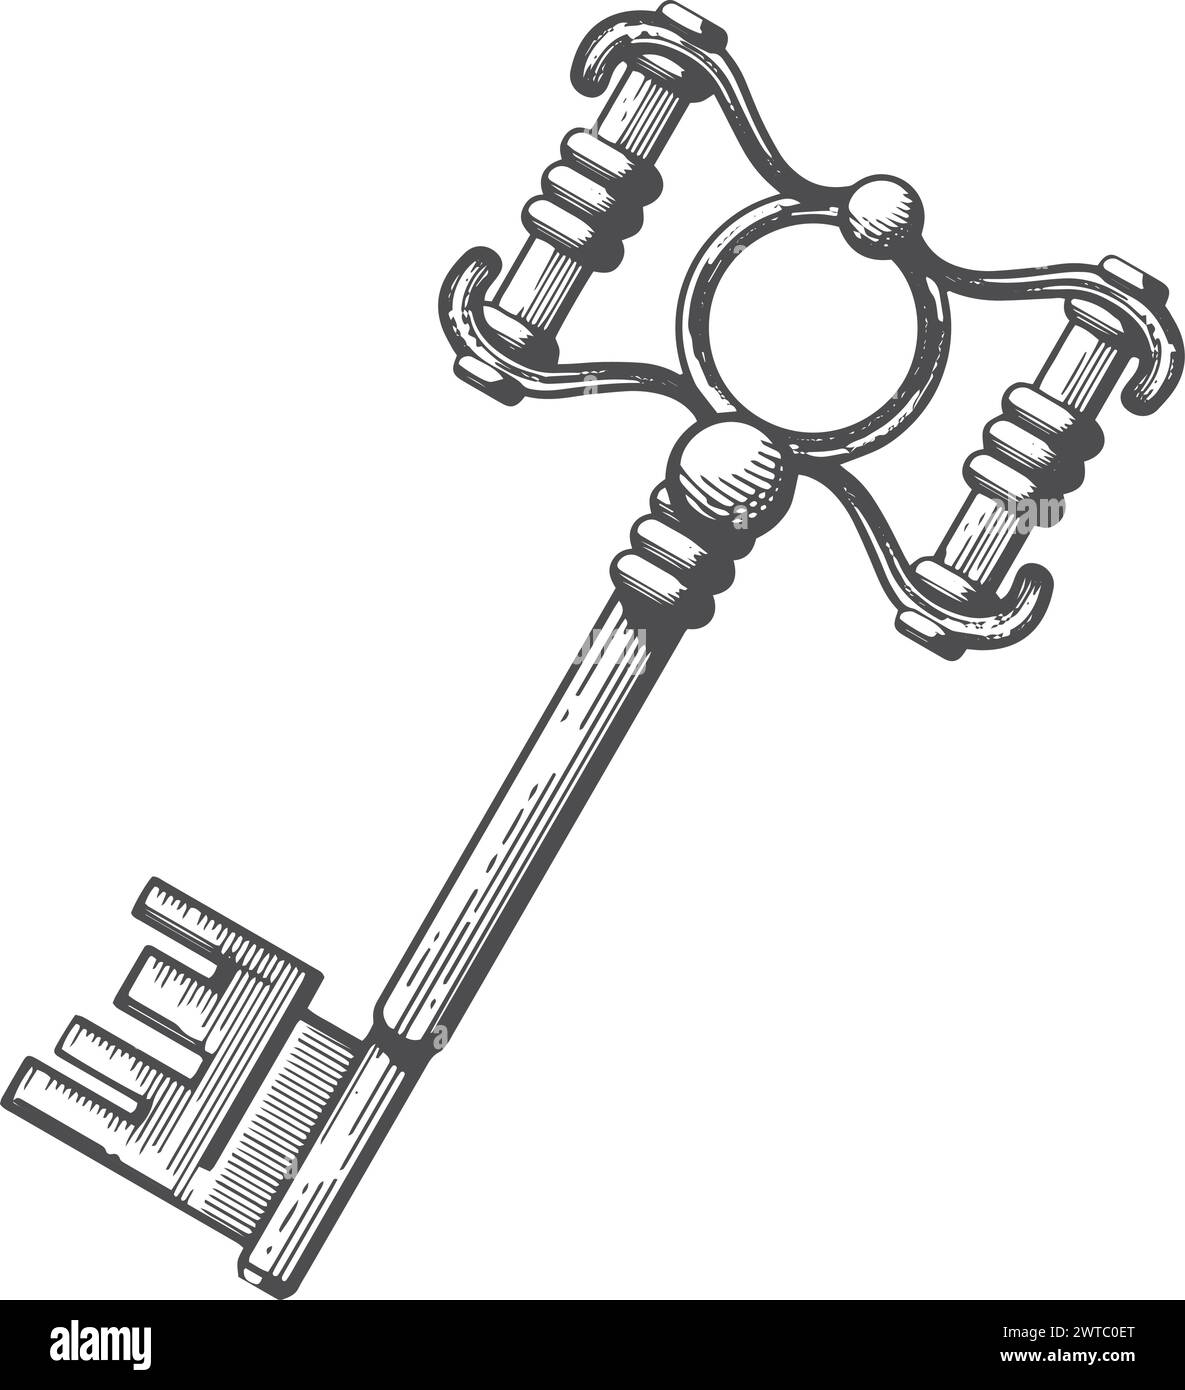 Medieval metal key with ornate filigree engraving Stock Vector